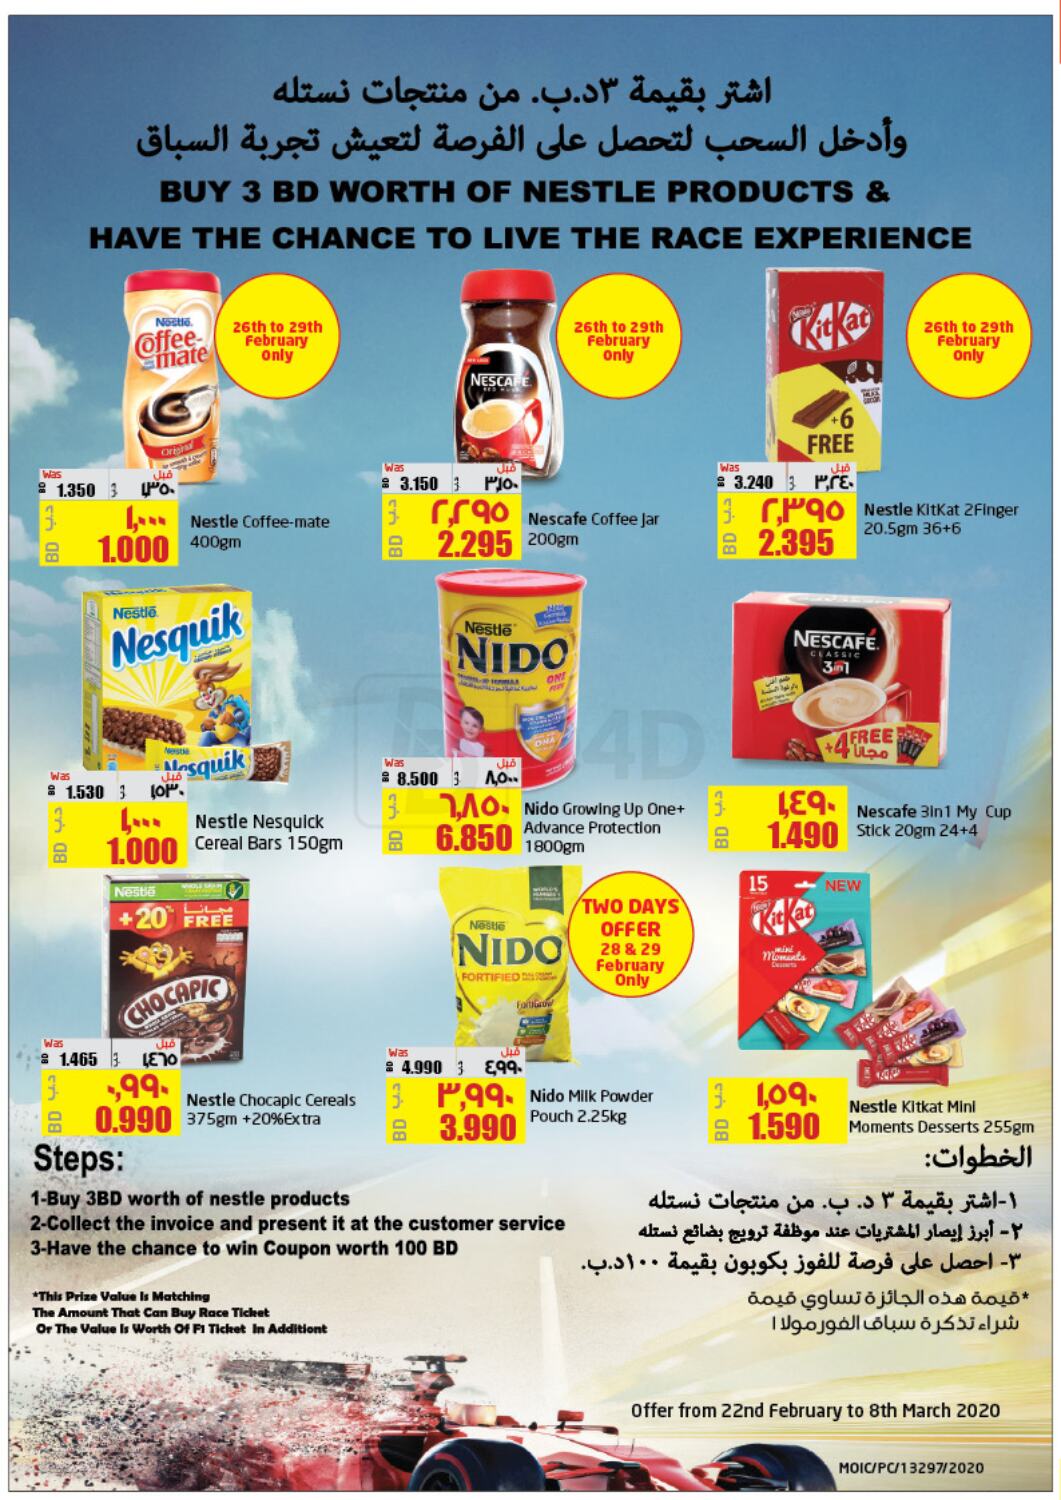 Lulu Hypermarket Great Cost Savers Offers in Bahrain